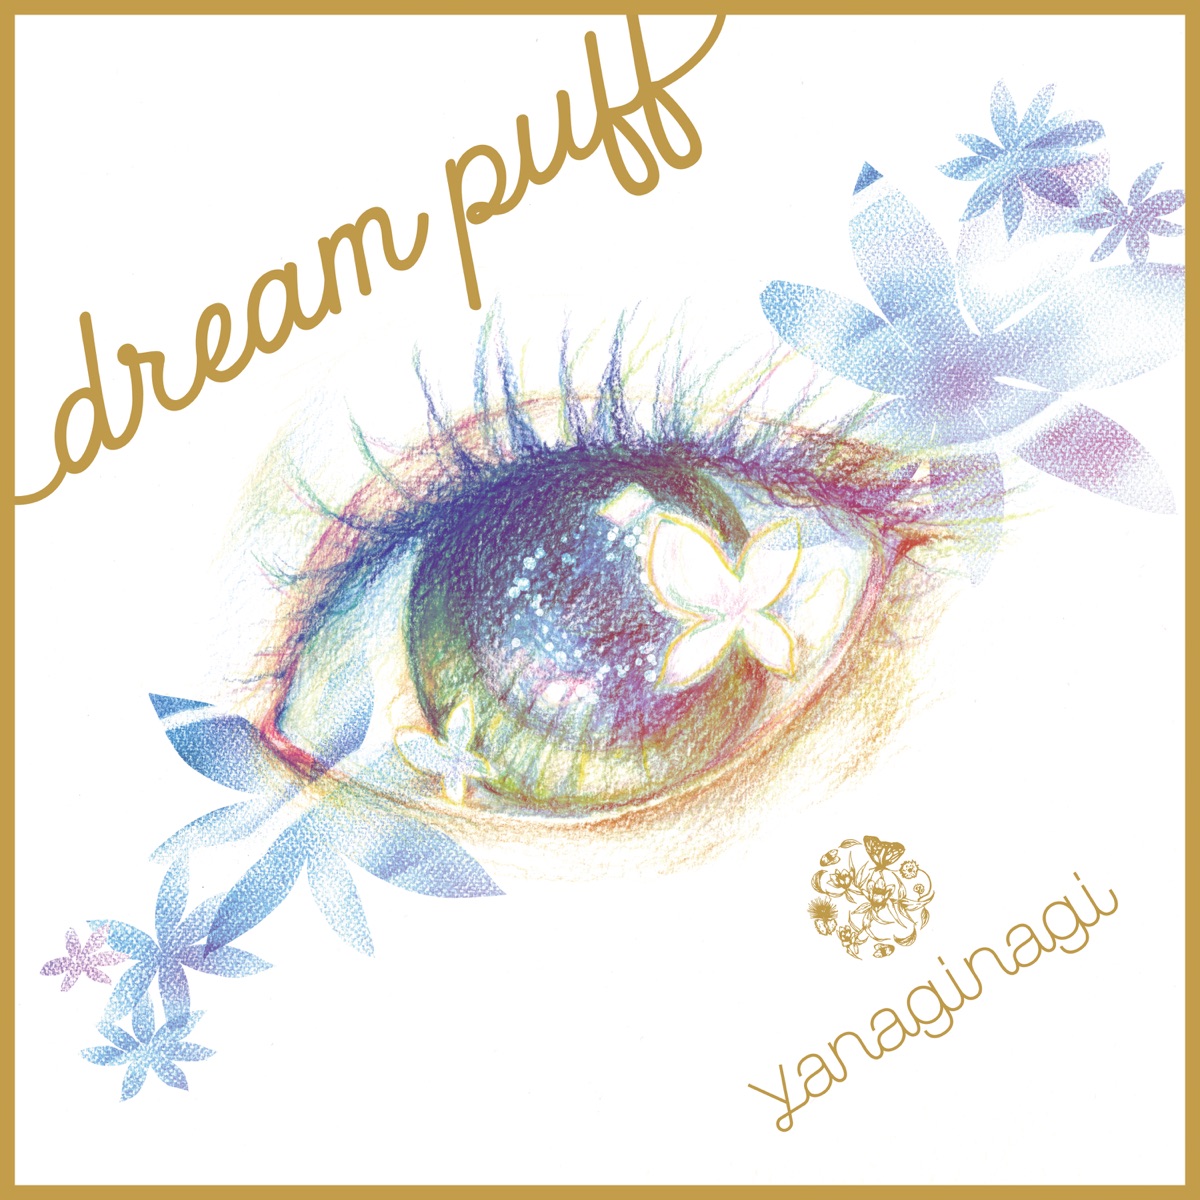 Cover art for『Yanagi Nagi - dream puff』from the release『dream puff』